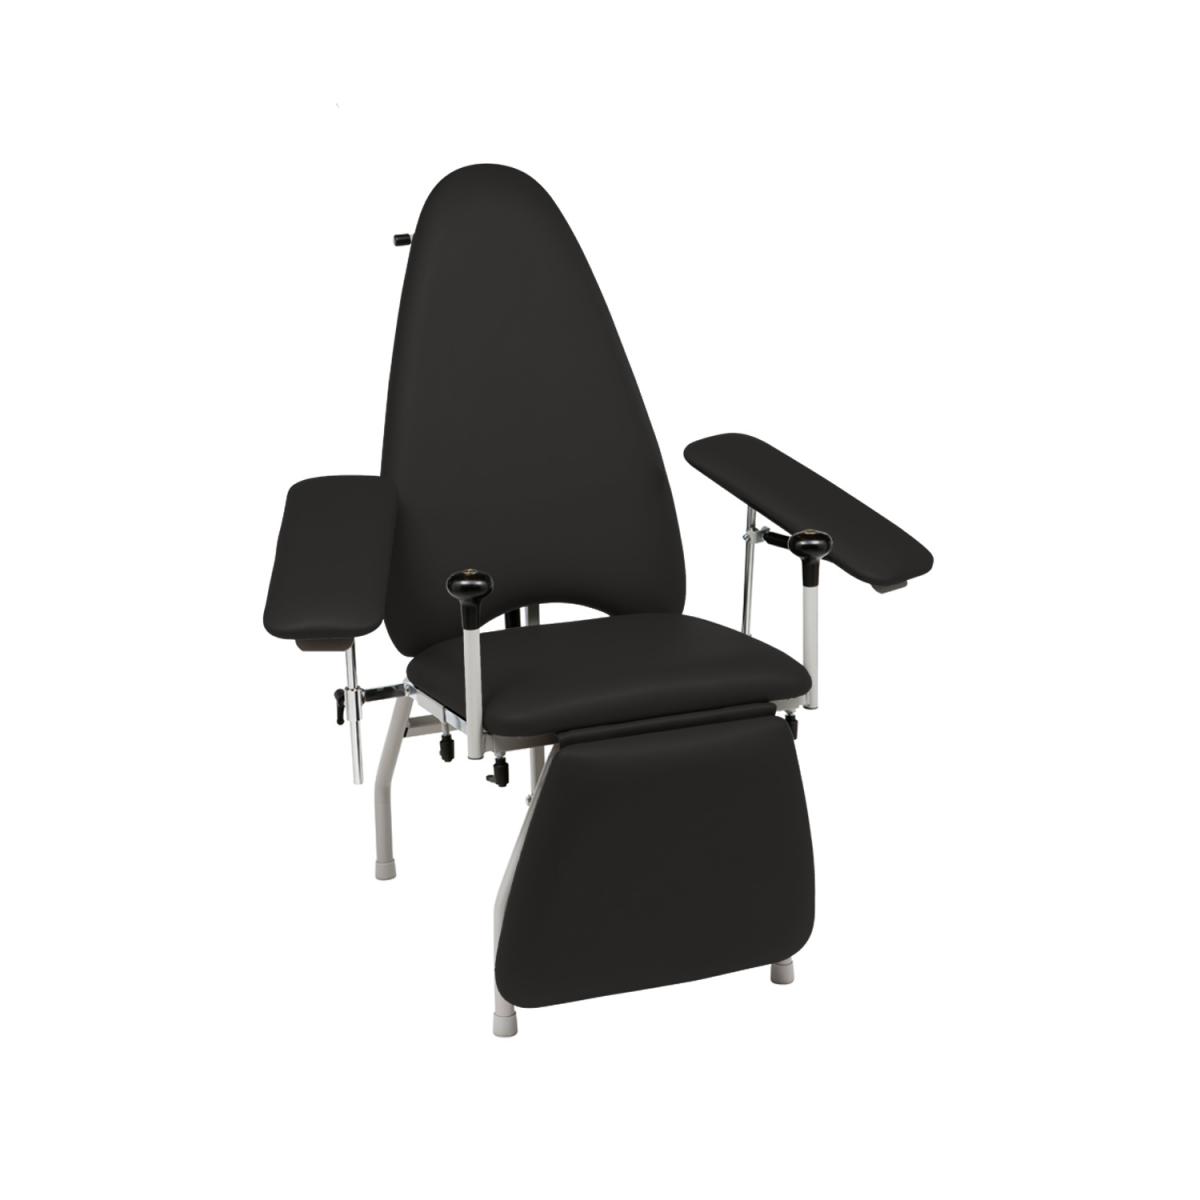 Sampling chair 072